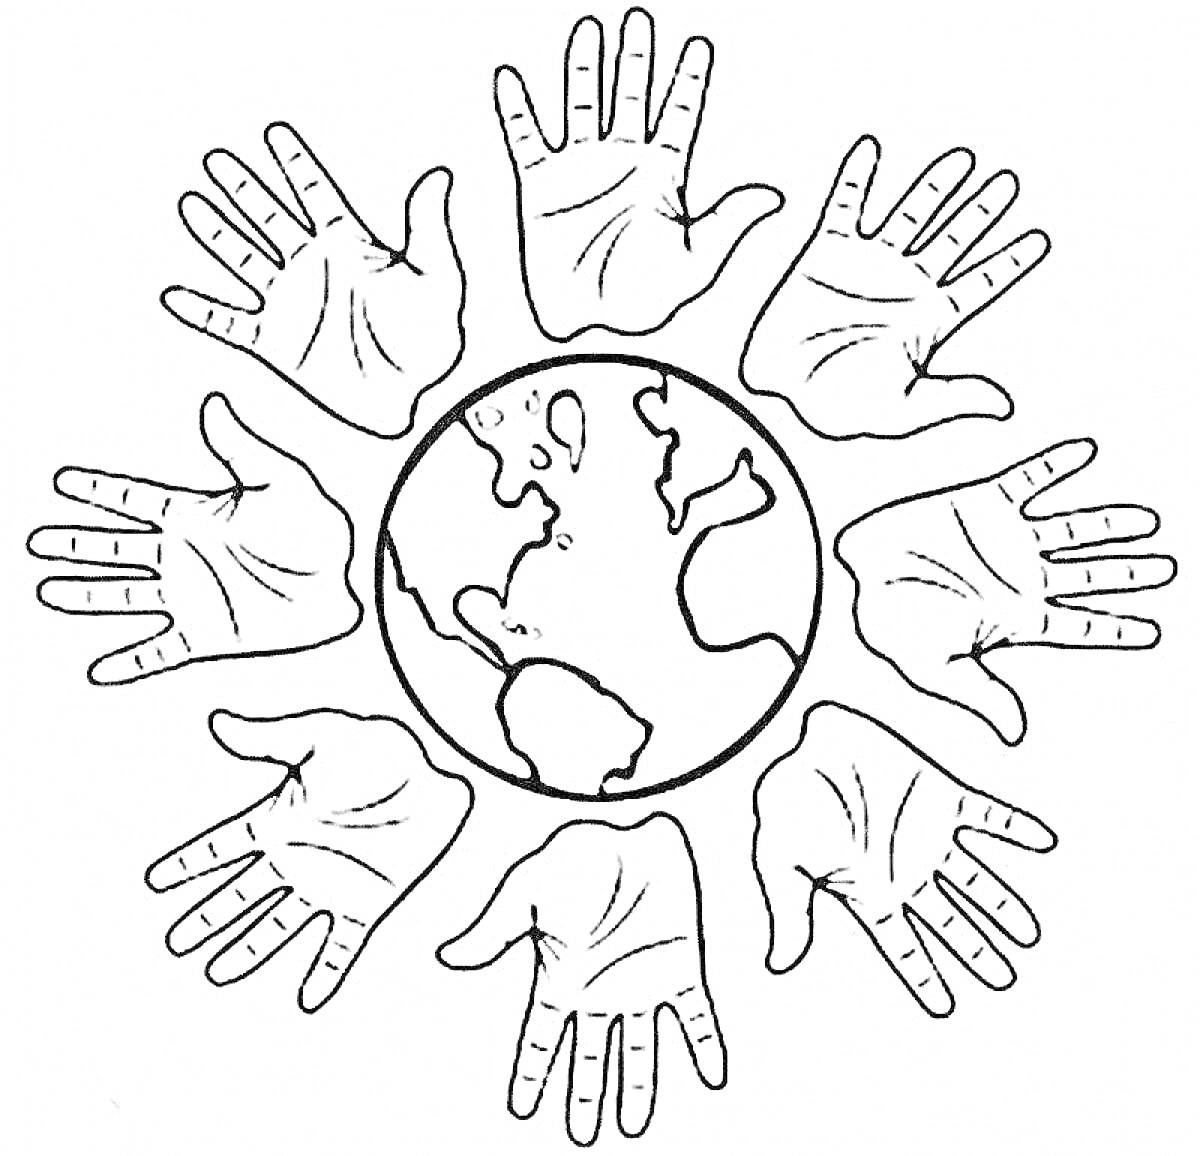 На раскраске изображено: Доброта, Мир, Земля, Руки, Дружба, Единство, Помощь, Забота